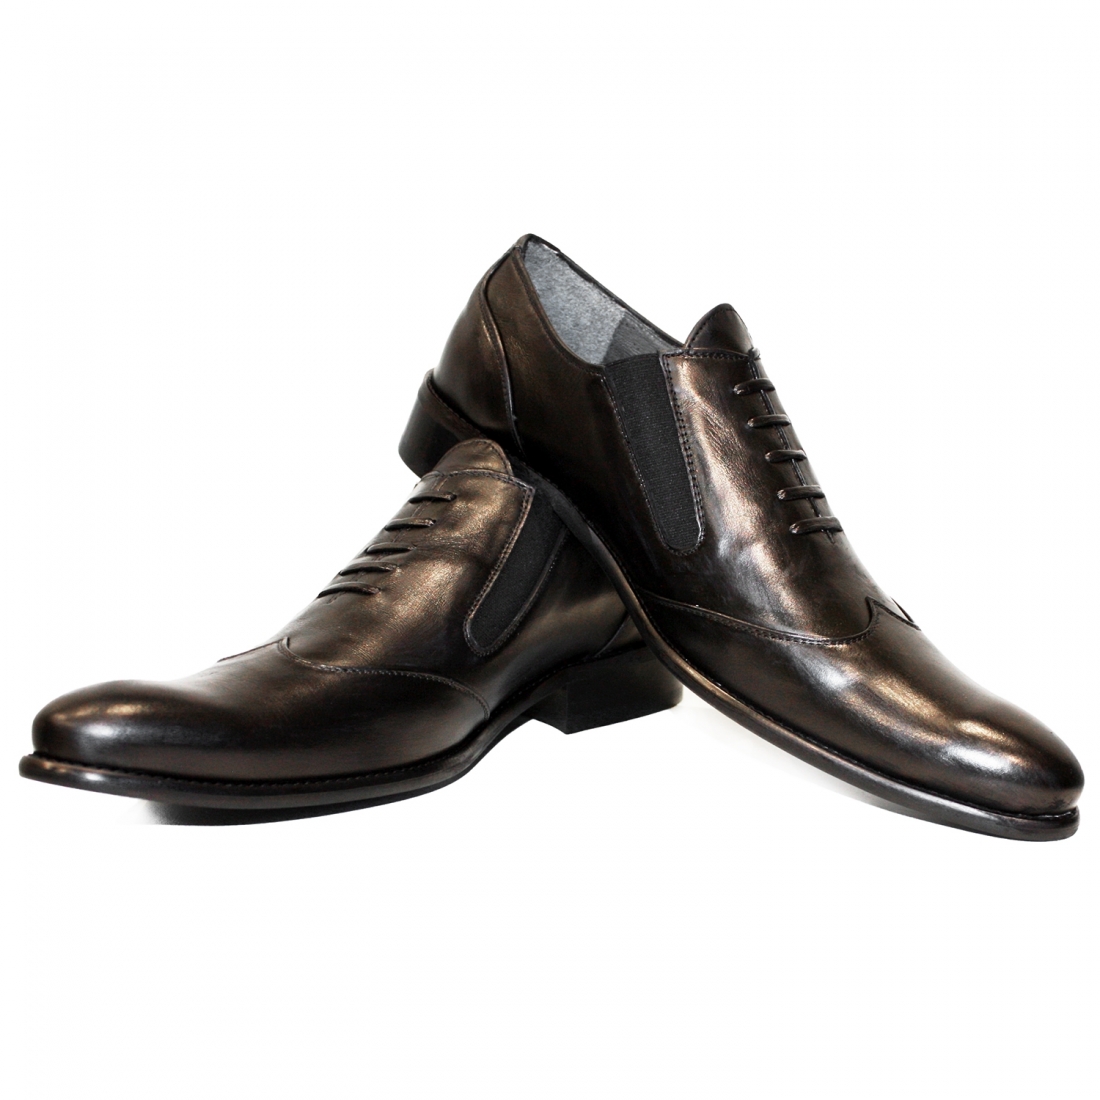 Modello Vichingo - Loafers & Slip-Ons - Handmade Colorful Italian Leather Shoes